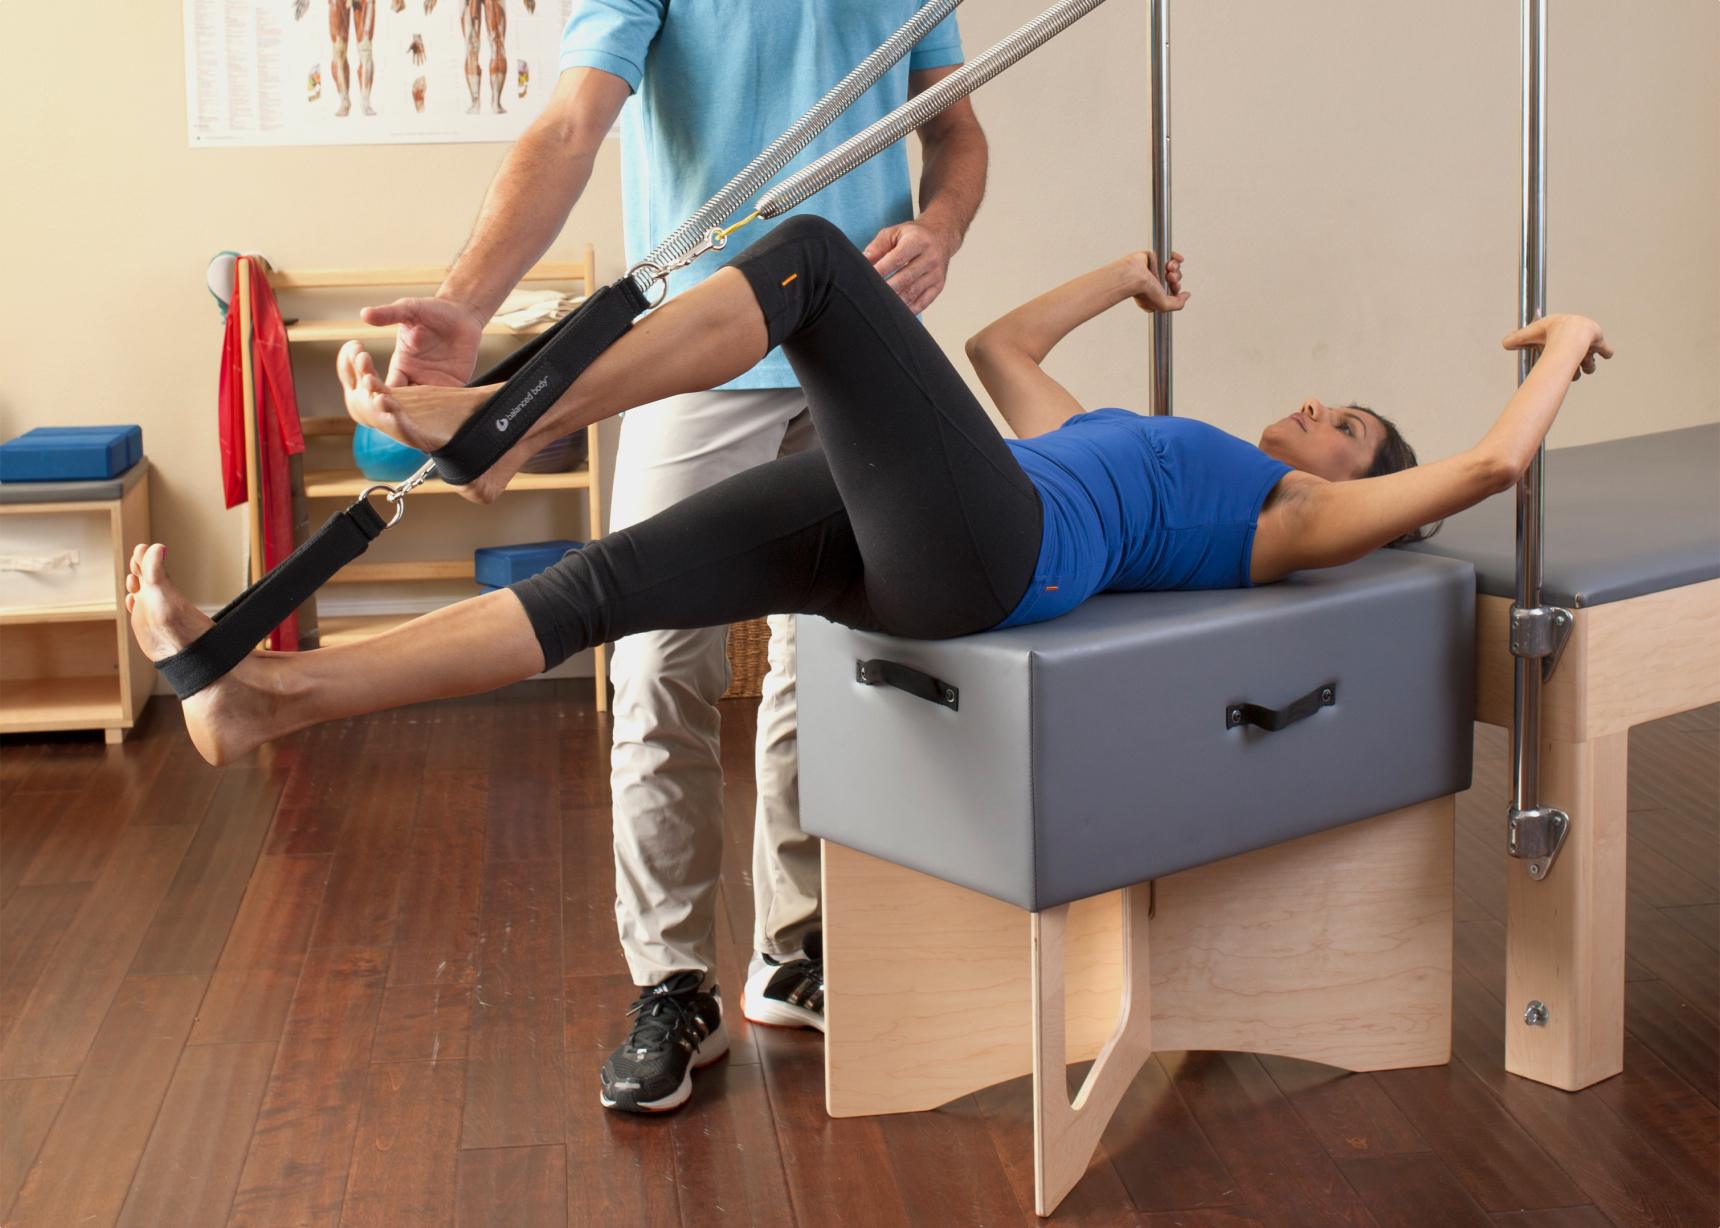 Pilates Sitting Box Riser - Balanced Body Sitting Box Riser